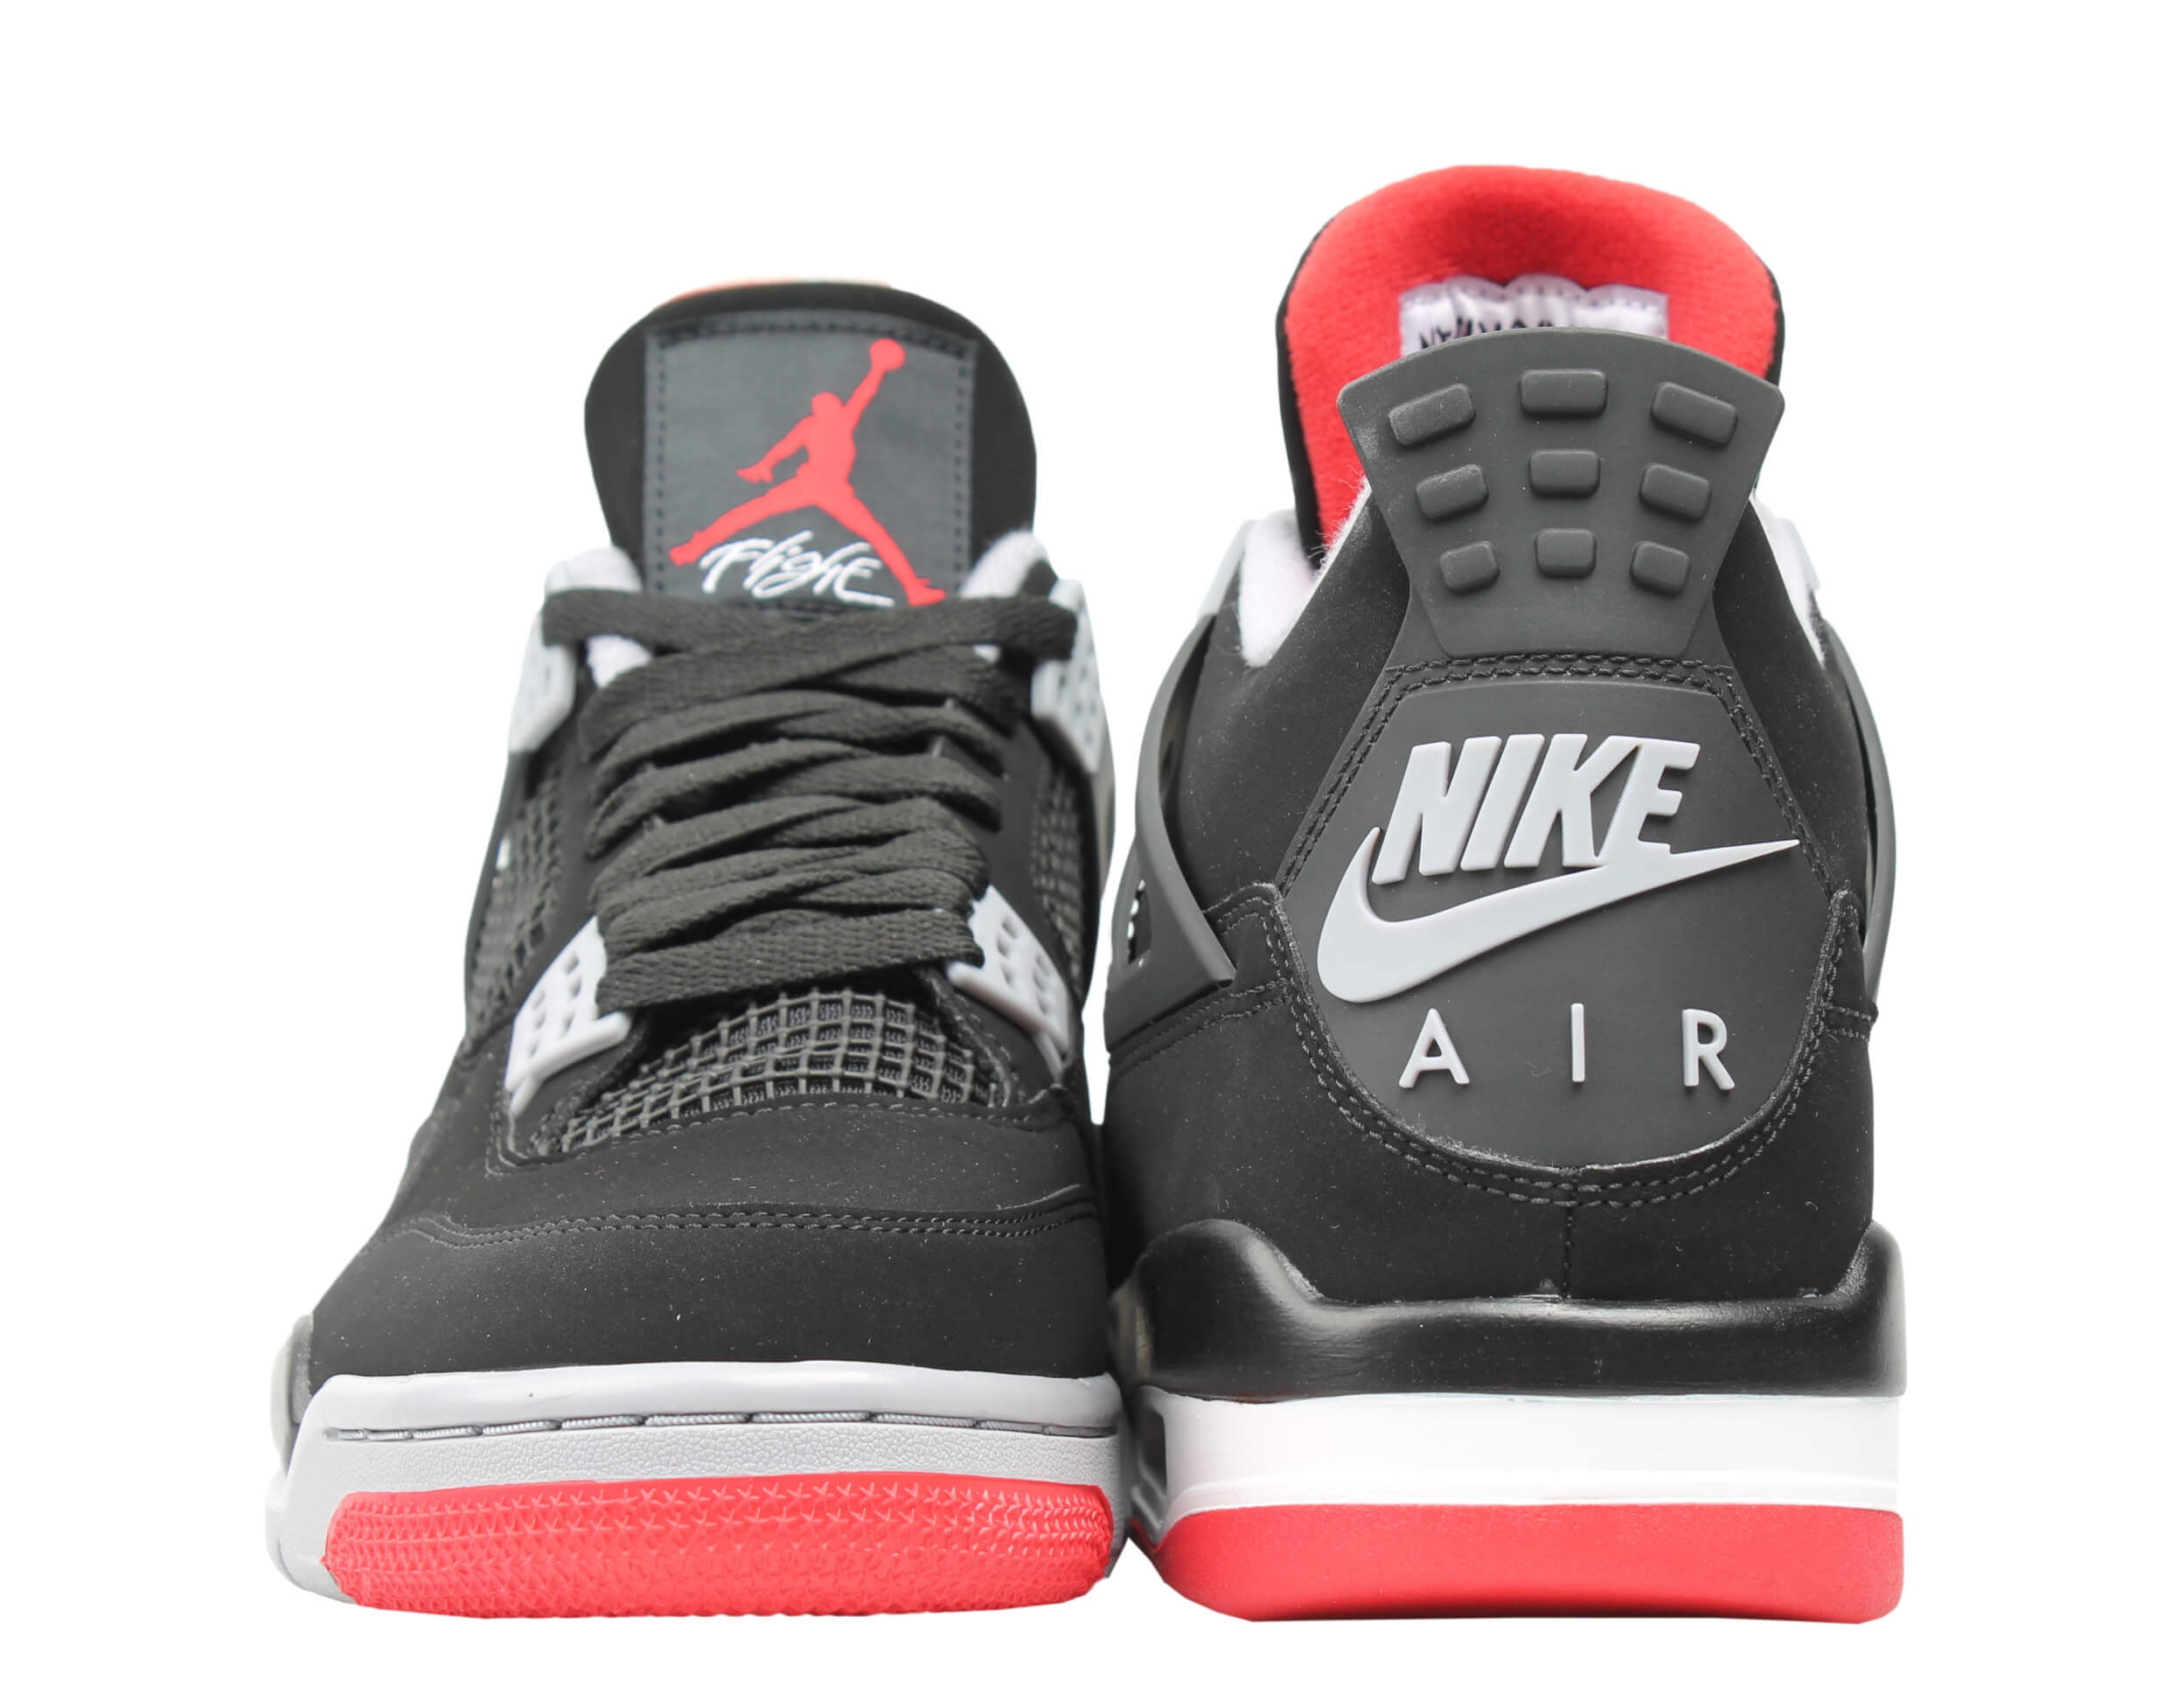 Jordan Mens Retro 4 Basketball Shoes, Black/Light Graphite, Size 9.5